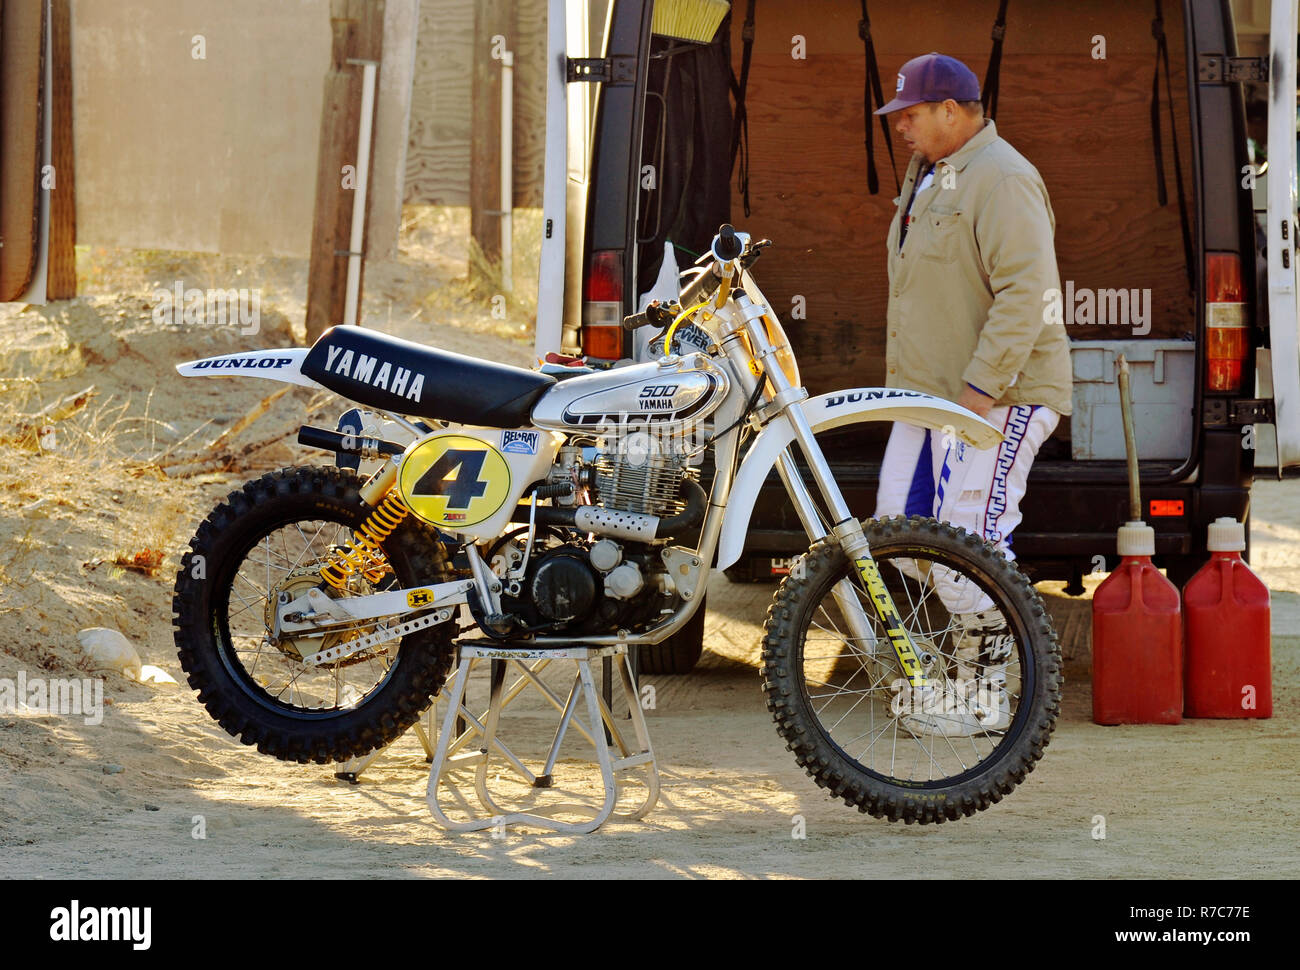 Benutzerdefinierte Viertakt Yamaha Dirt Bike Stockfoto